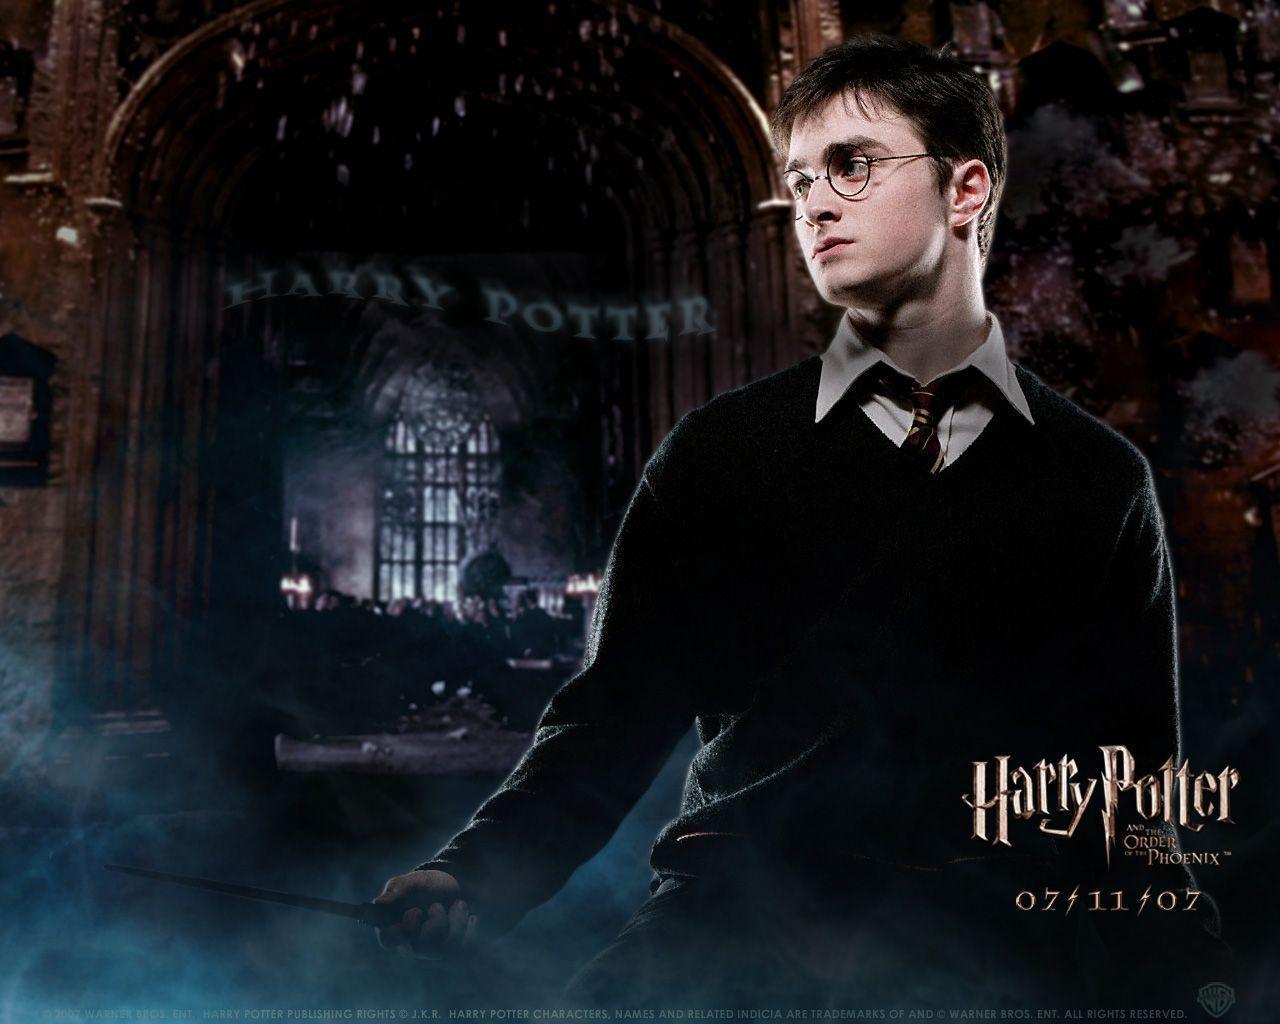 Download Harry Potter Movie Wallpaper, 404 Creative Studios